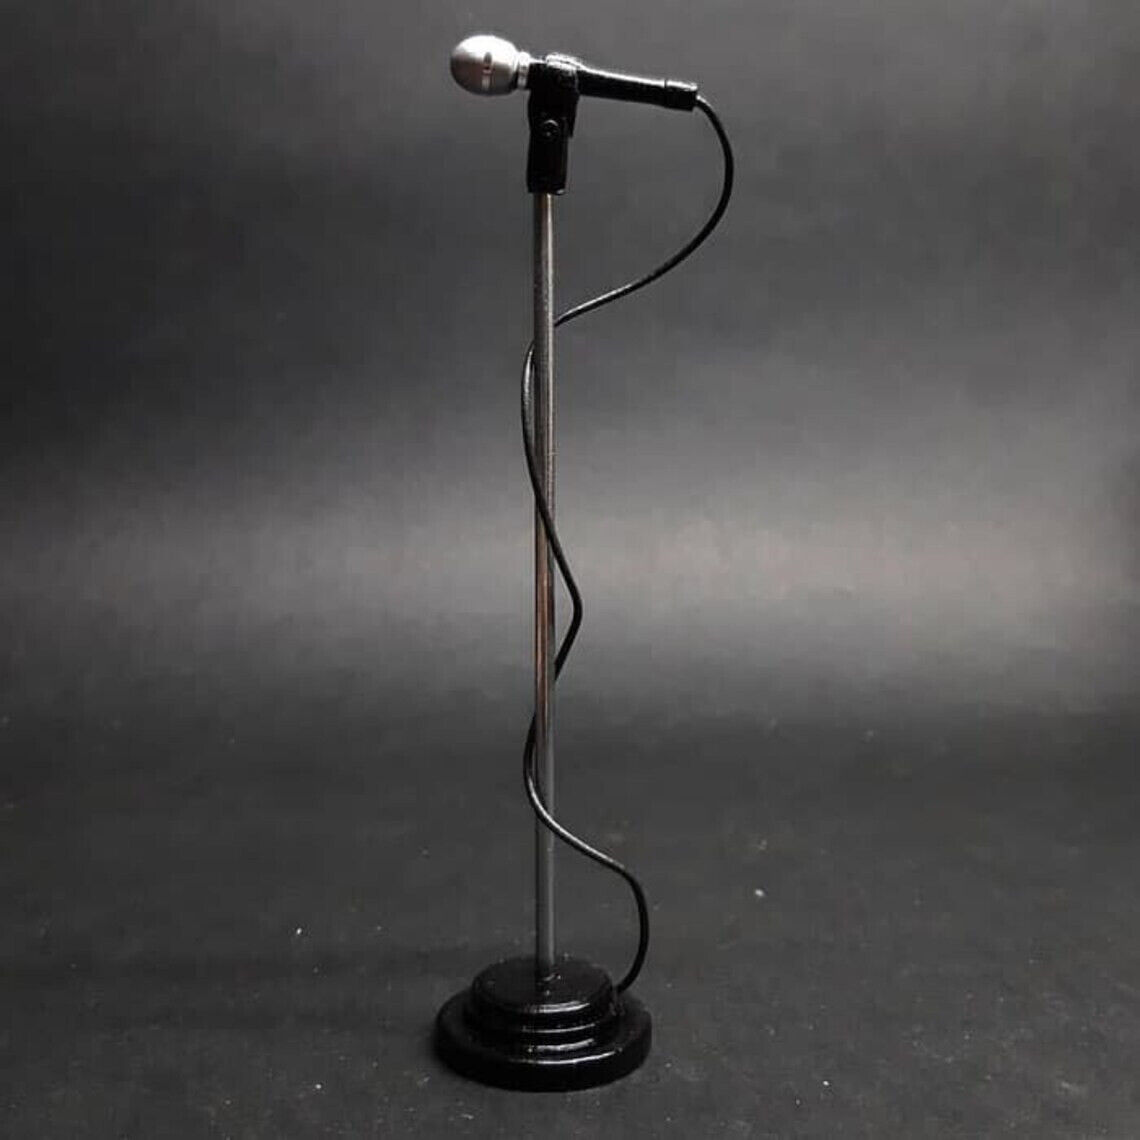 Miniature Microphone Mics 4 pcs 1:12 Black Instrument Band Gift Display